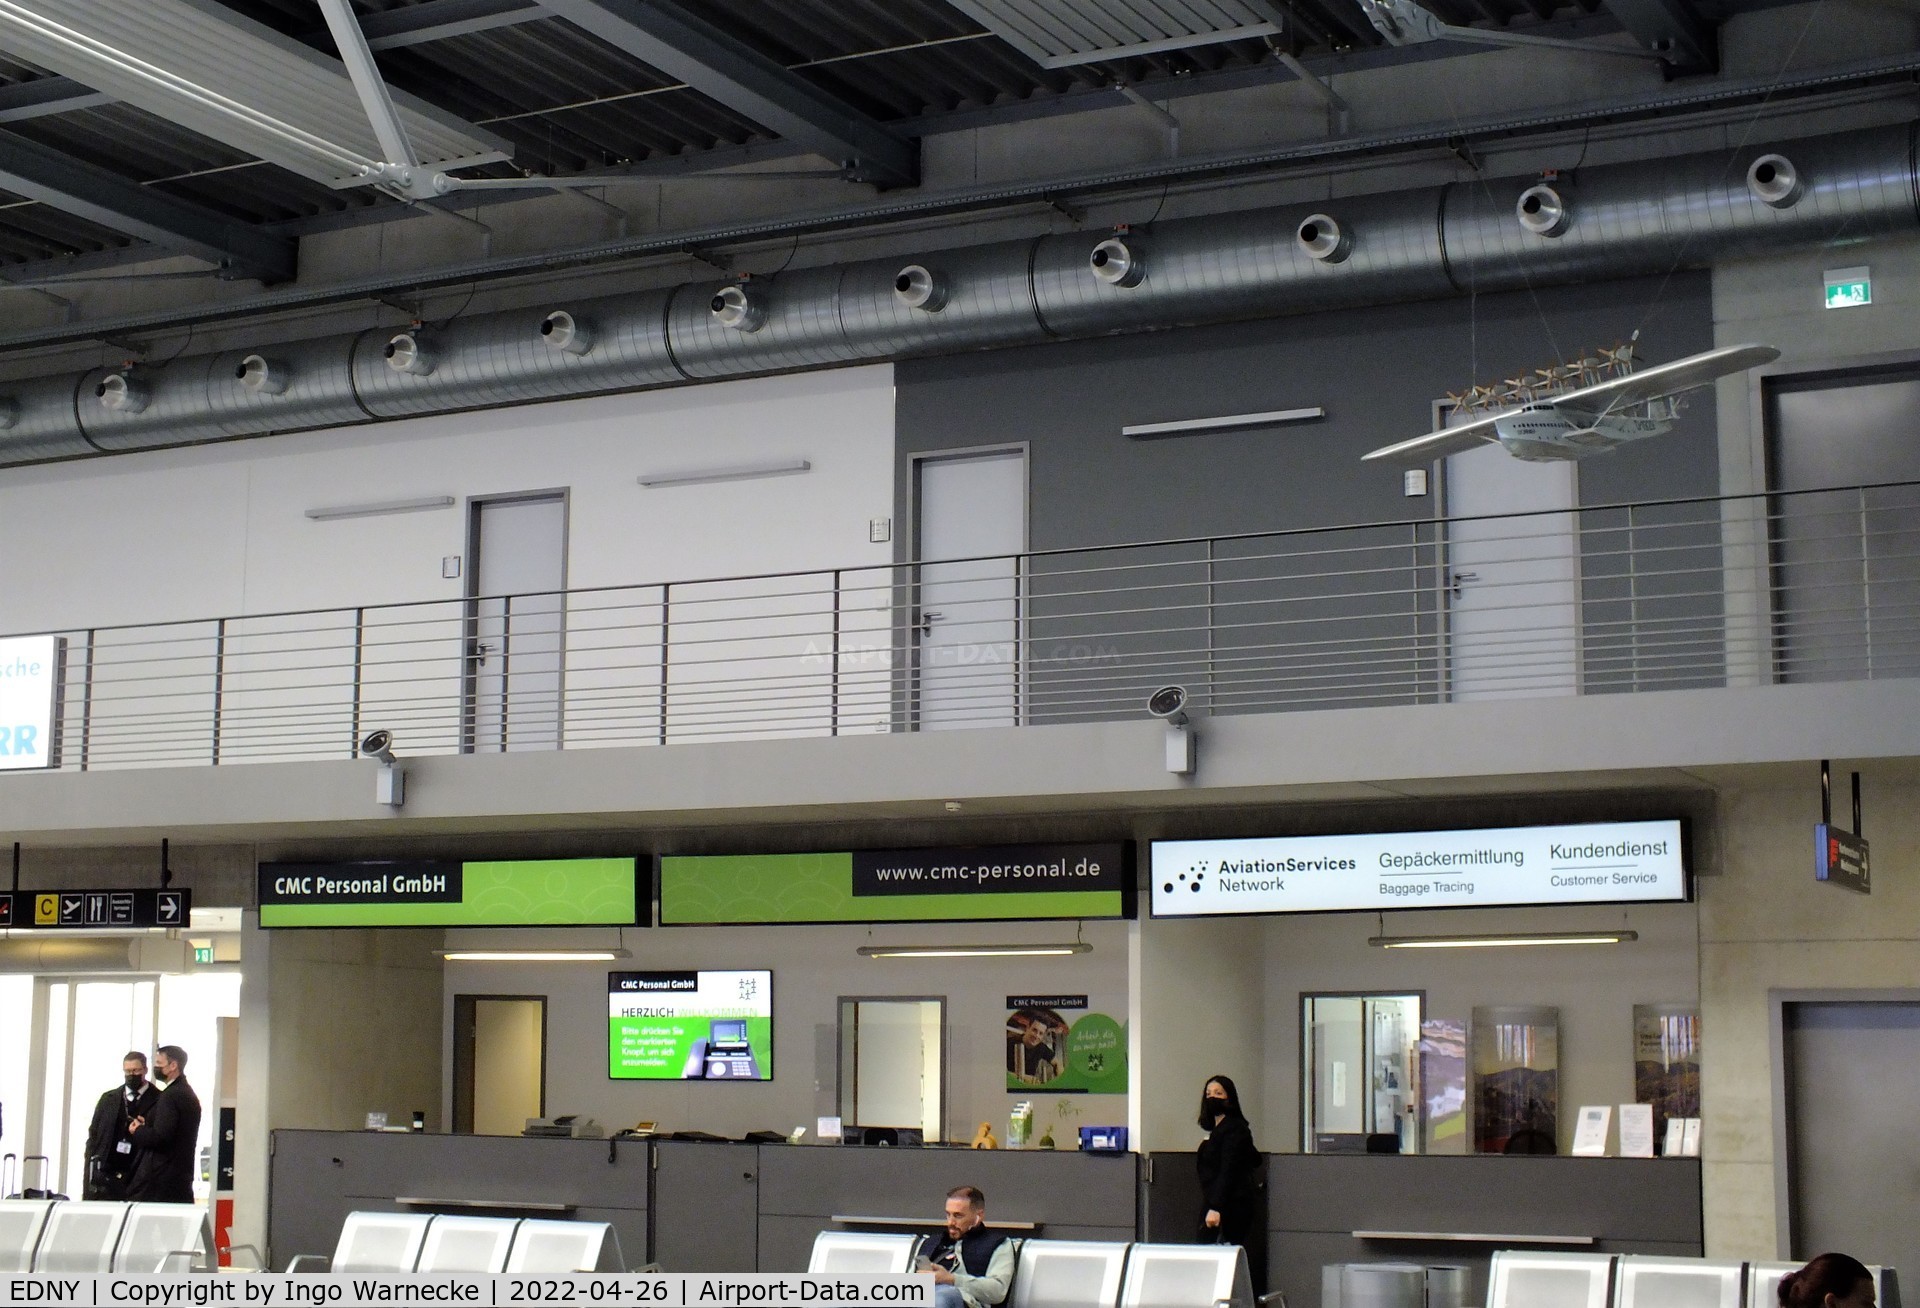 Bodensee Airport, Friedrichshafen Germany (EDNY) - inside the new terminal at Friedrichshafen Bodensee airport